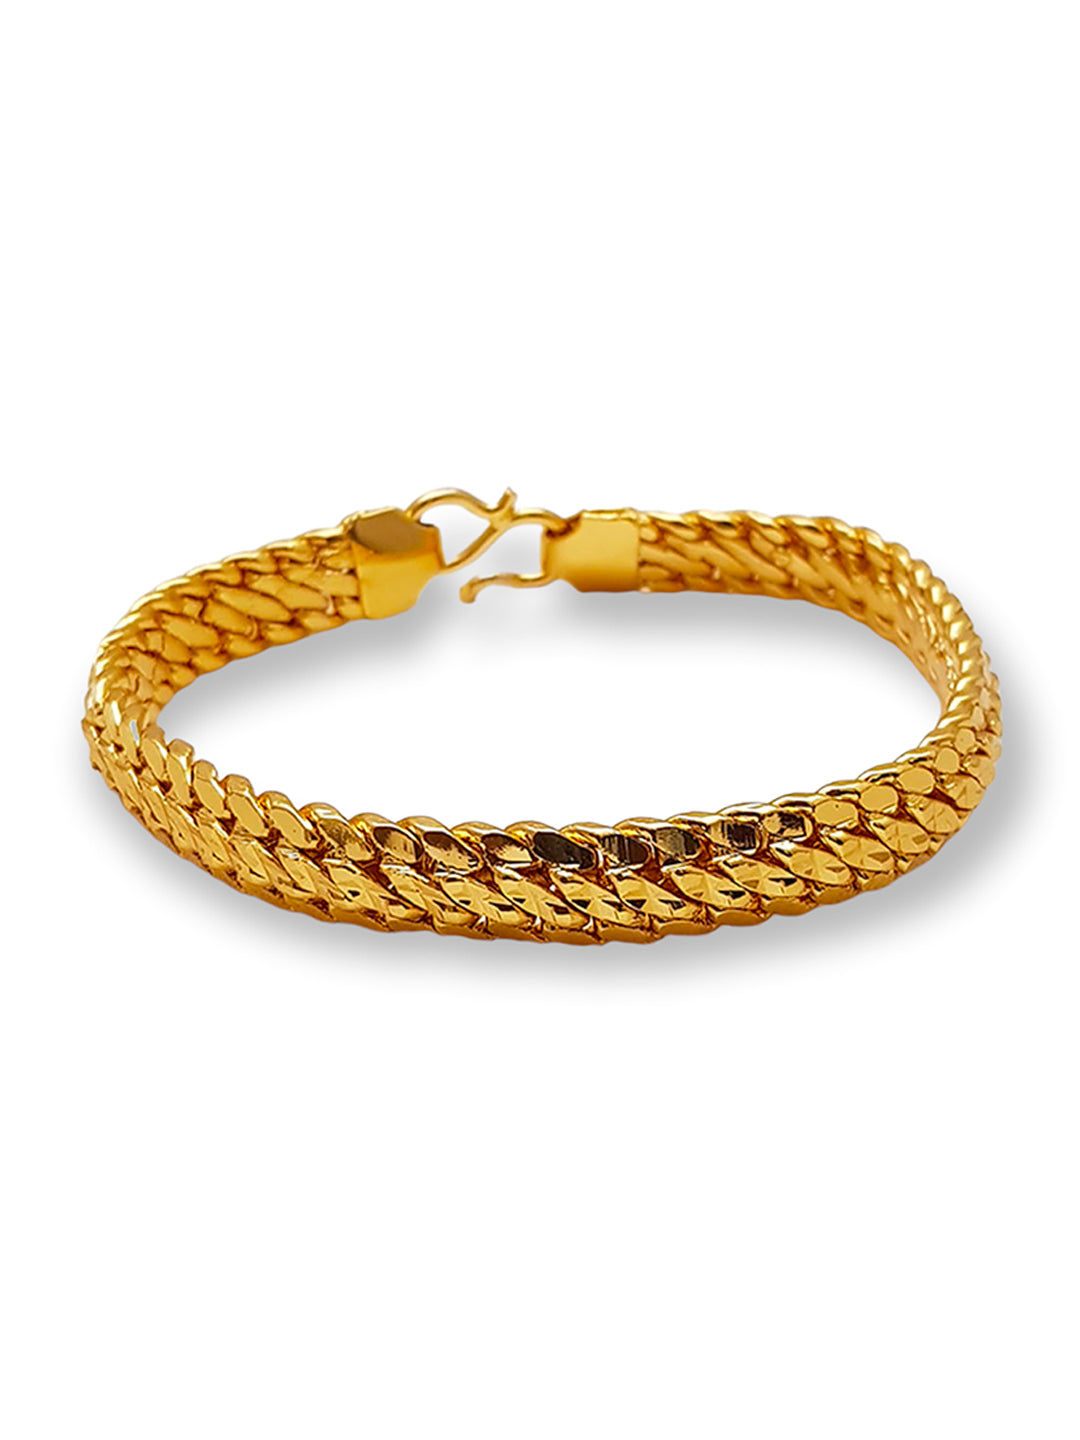 Buy Jewar Mandi Jewar Bracelet Men's Gold Plated Finish Beautiful Jewelry  6948 at Amazon.in